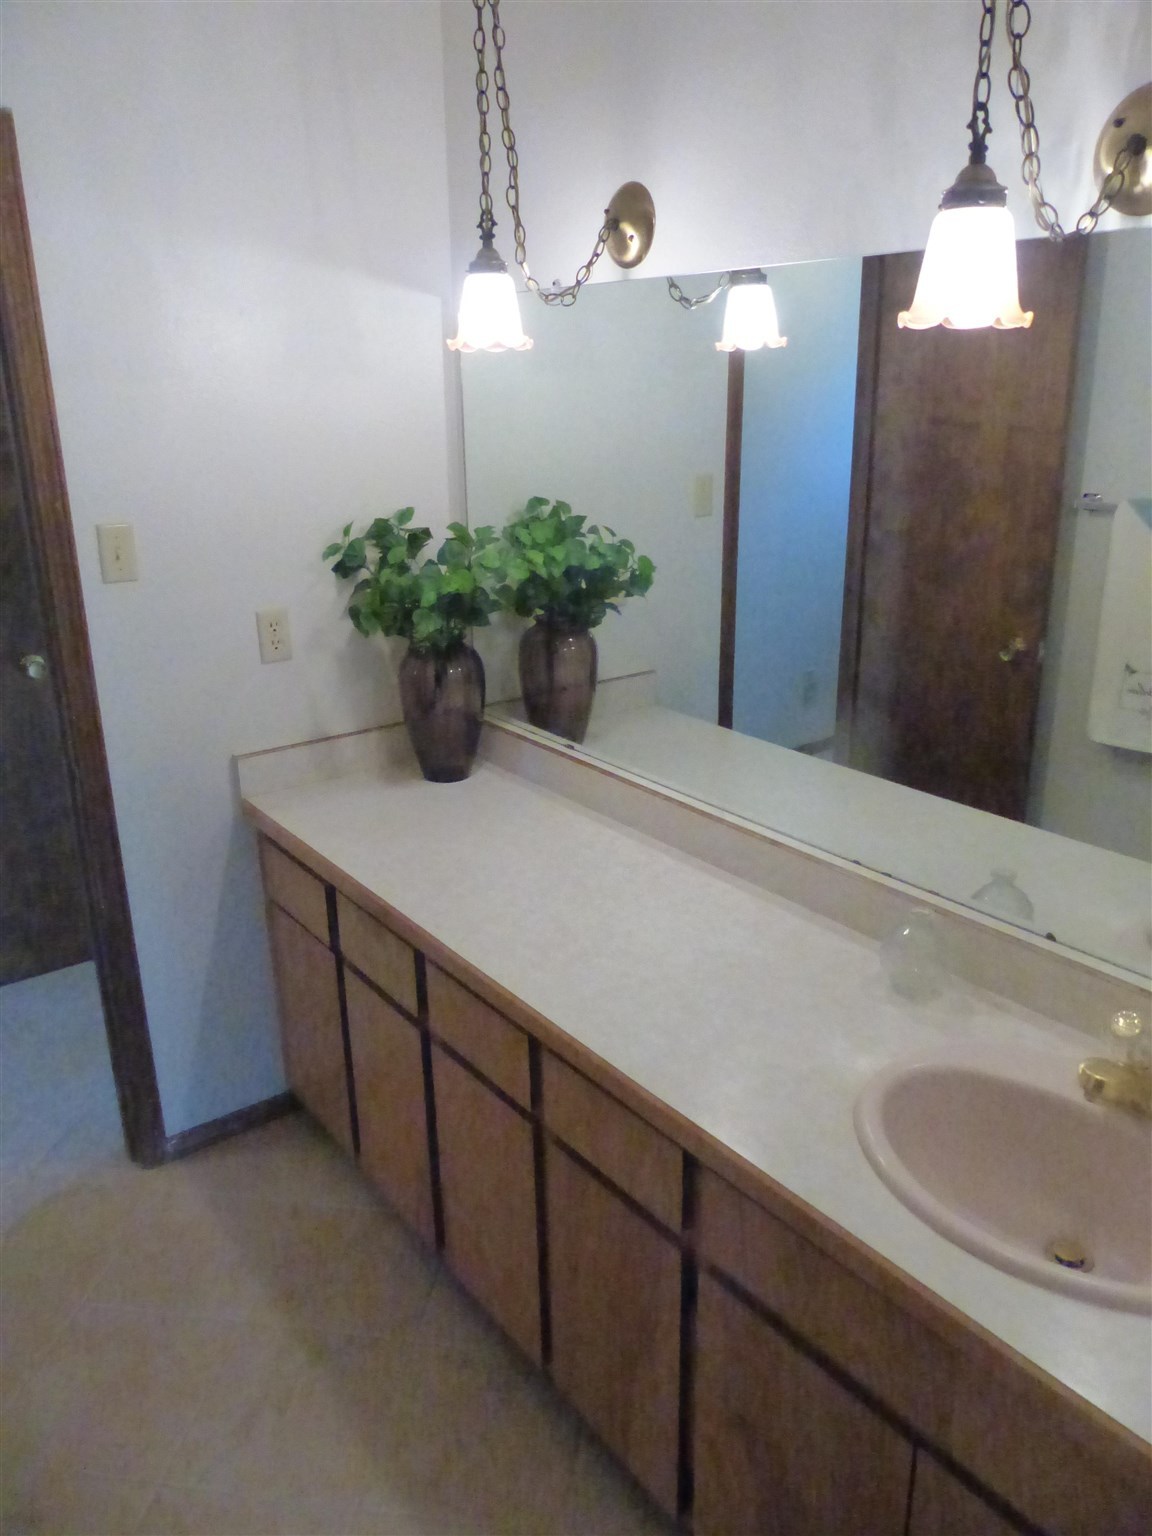 304 Ridgecrest, White Rock, New Mexico 87547, 2 Bedrooms Bedrooms, ,1 BathroomBathrooms,Residential,For Sale,304 Ridgecrest,202103131